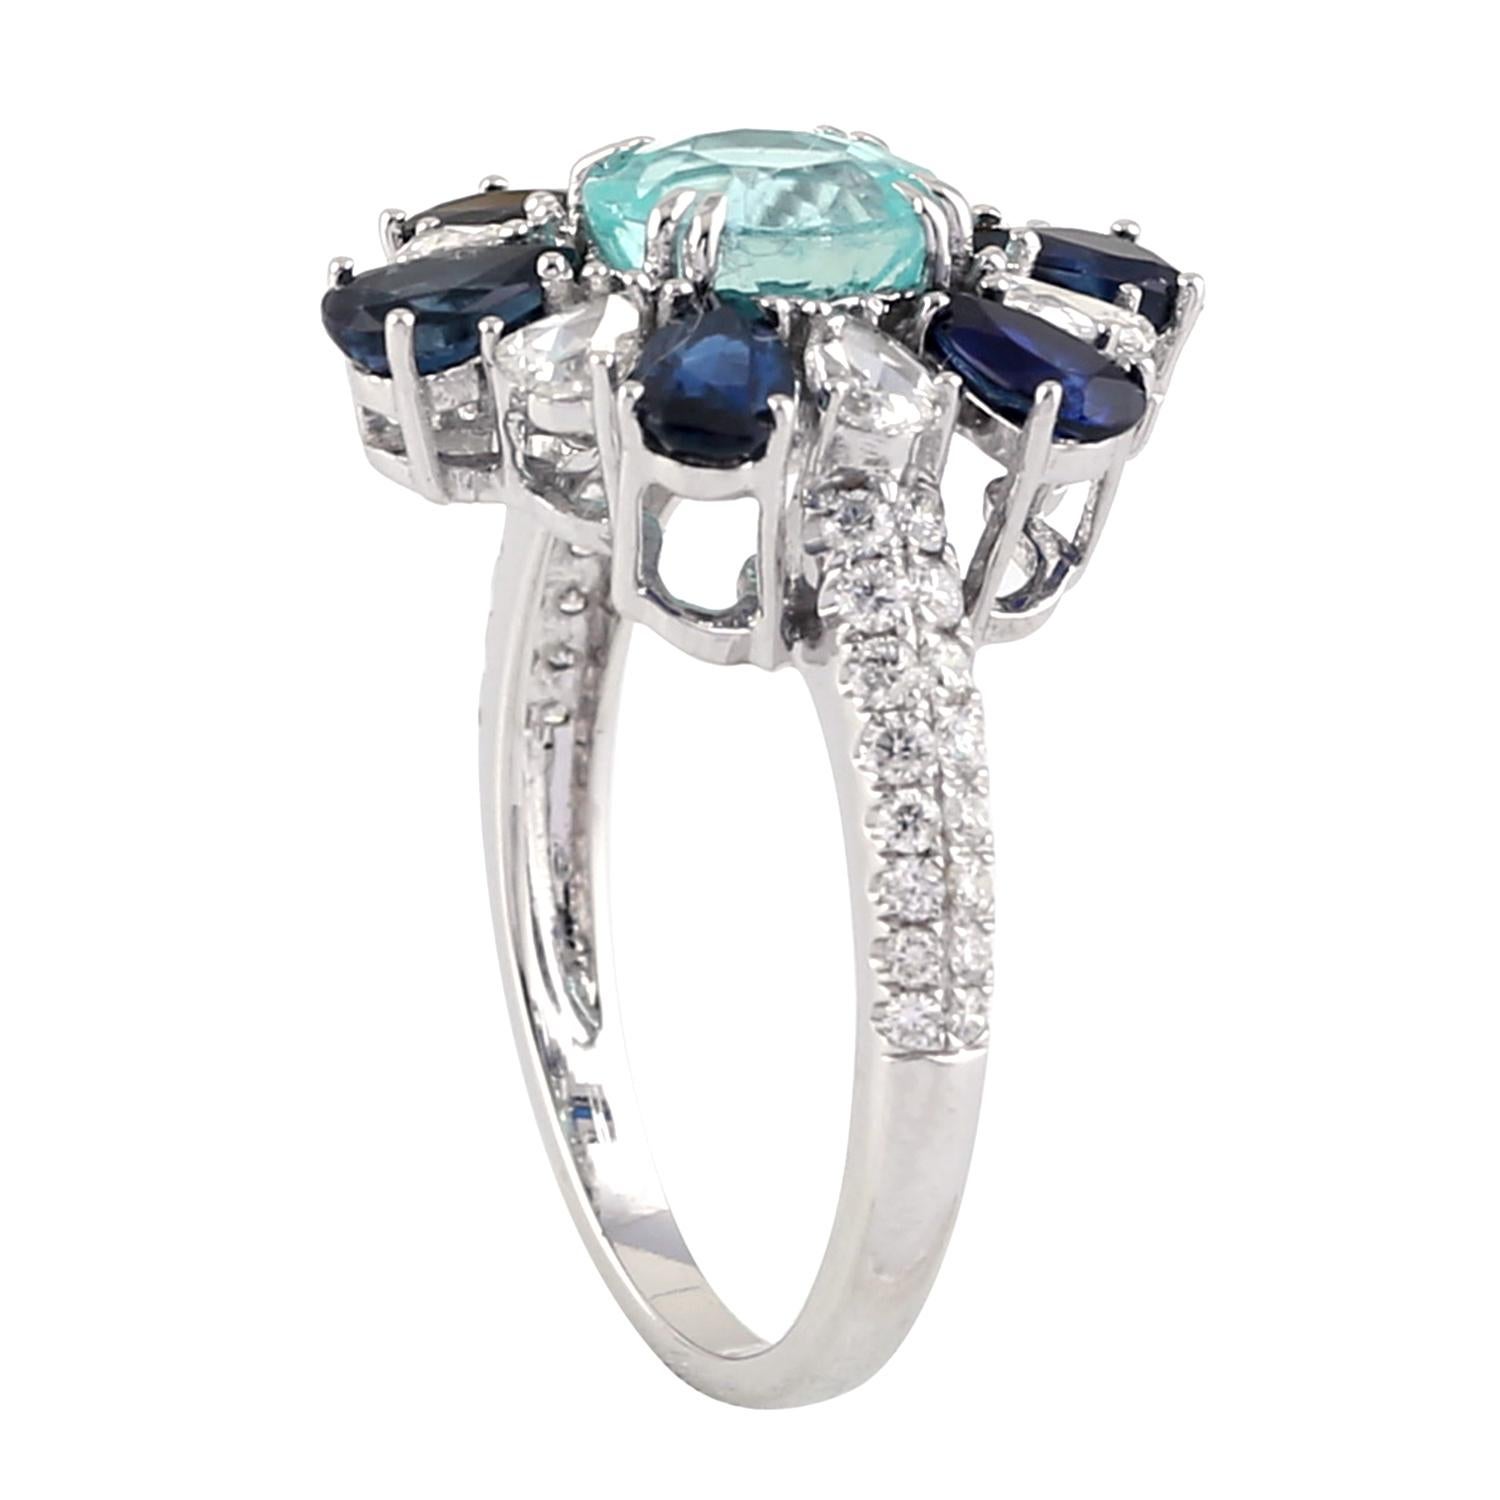 Brilliant Cut Paraiba, Blue Sapphire Diamond Ring in 18 Karat White Gold